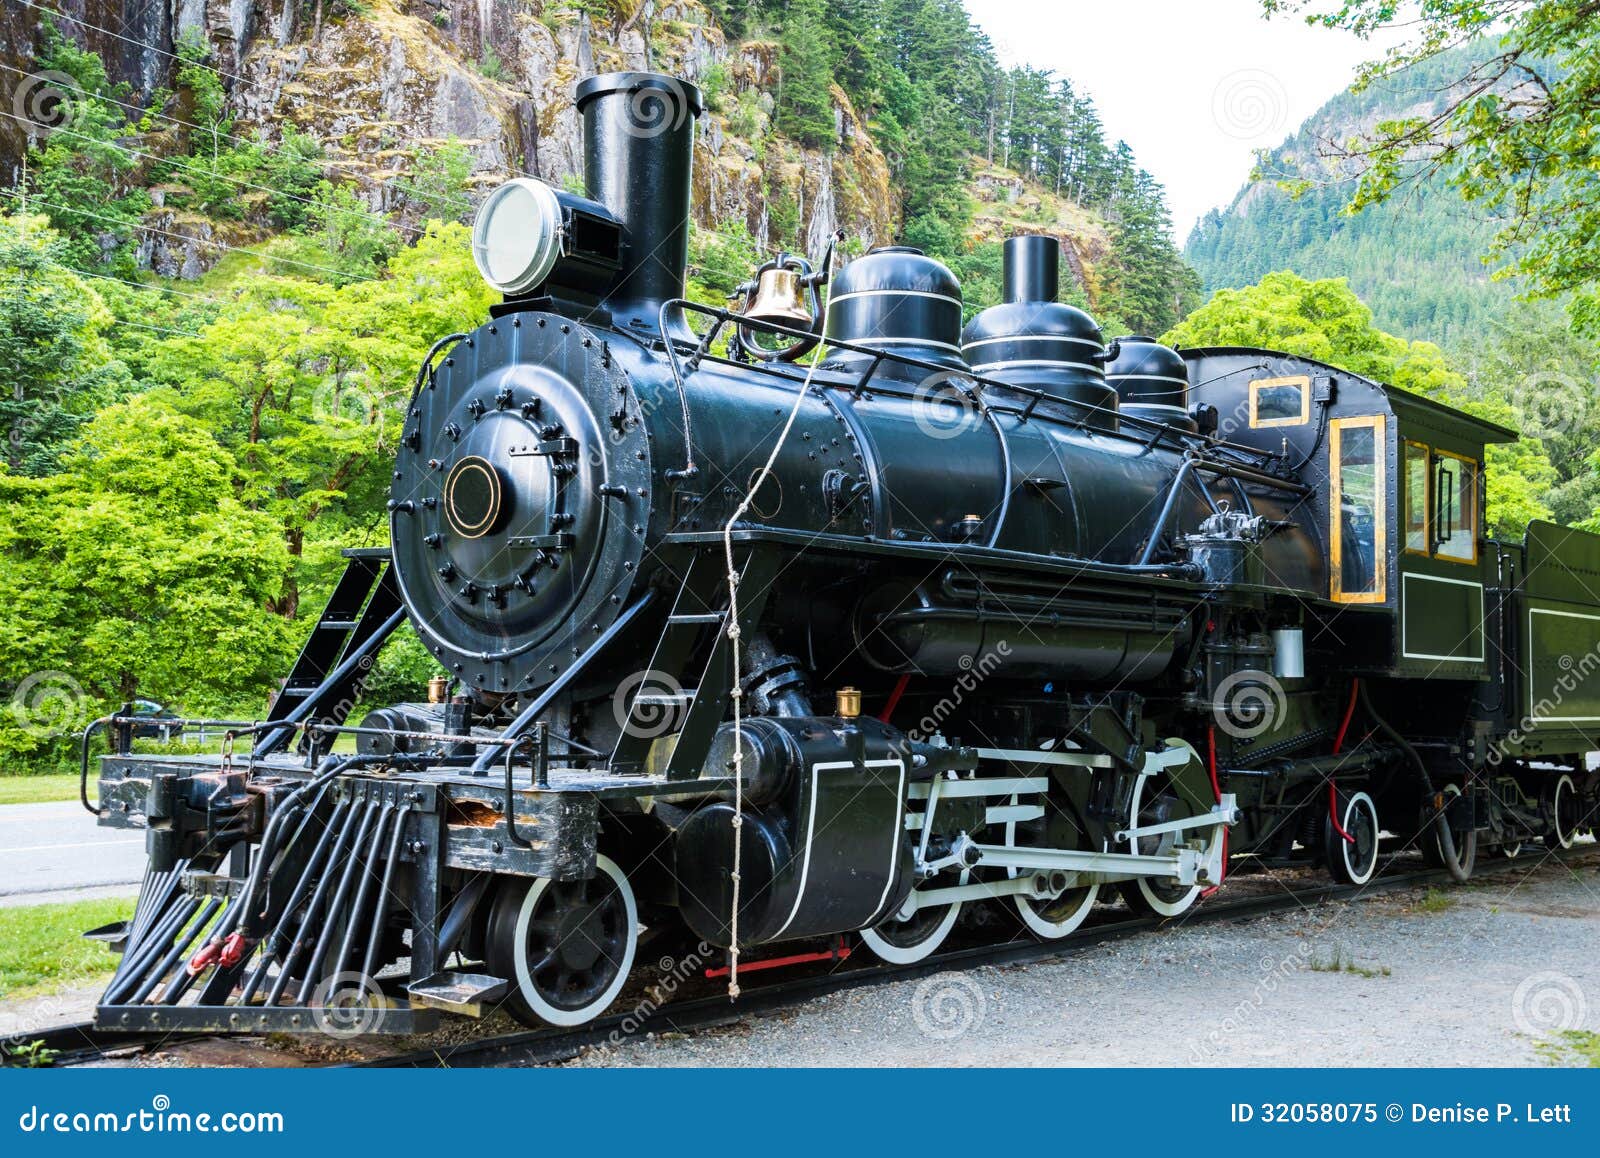 steam engine train locomotive